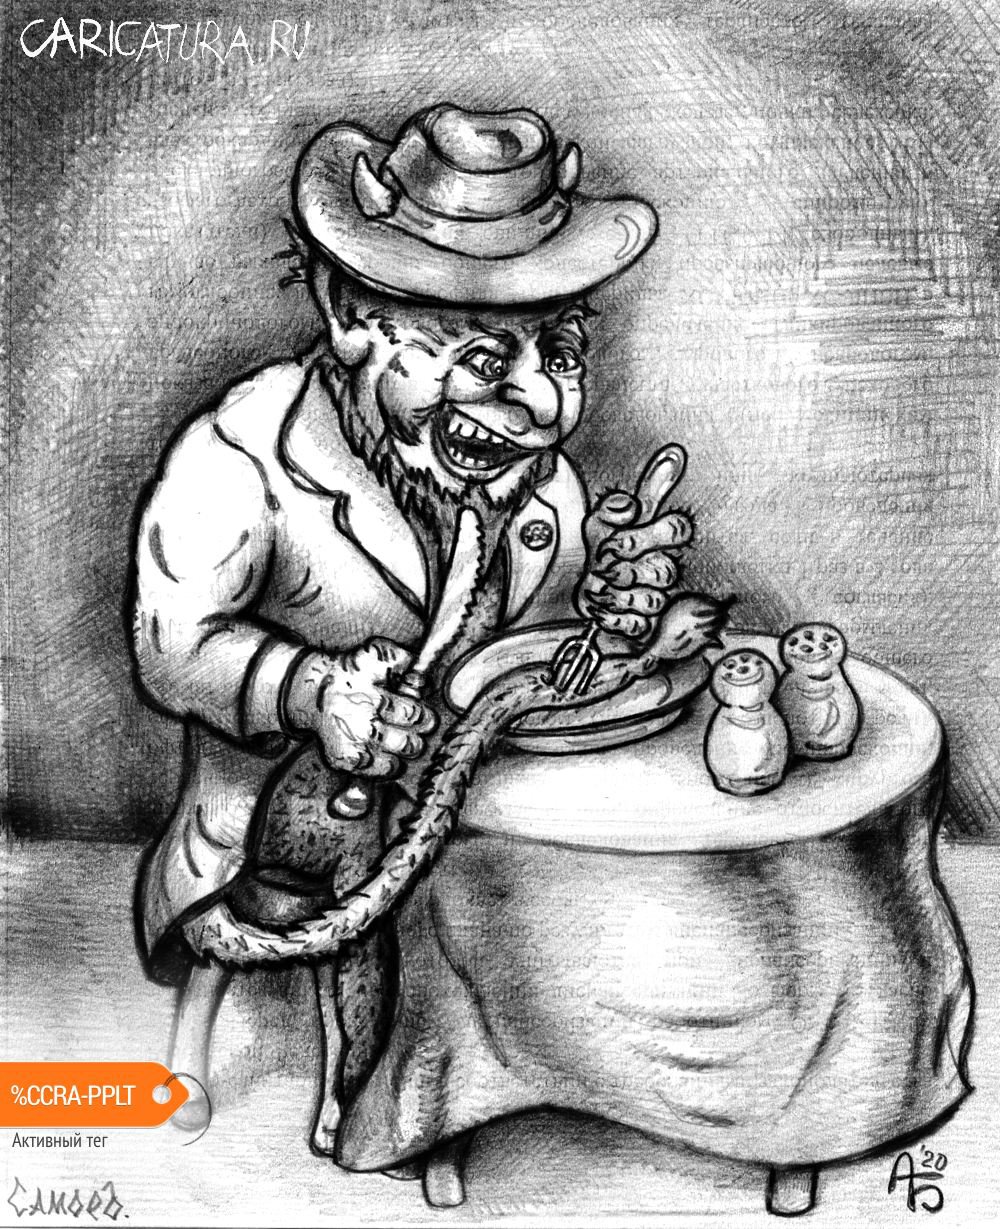 Карикатура "Самоед", Александр Богданов